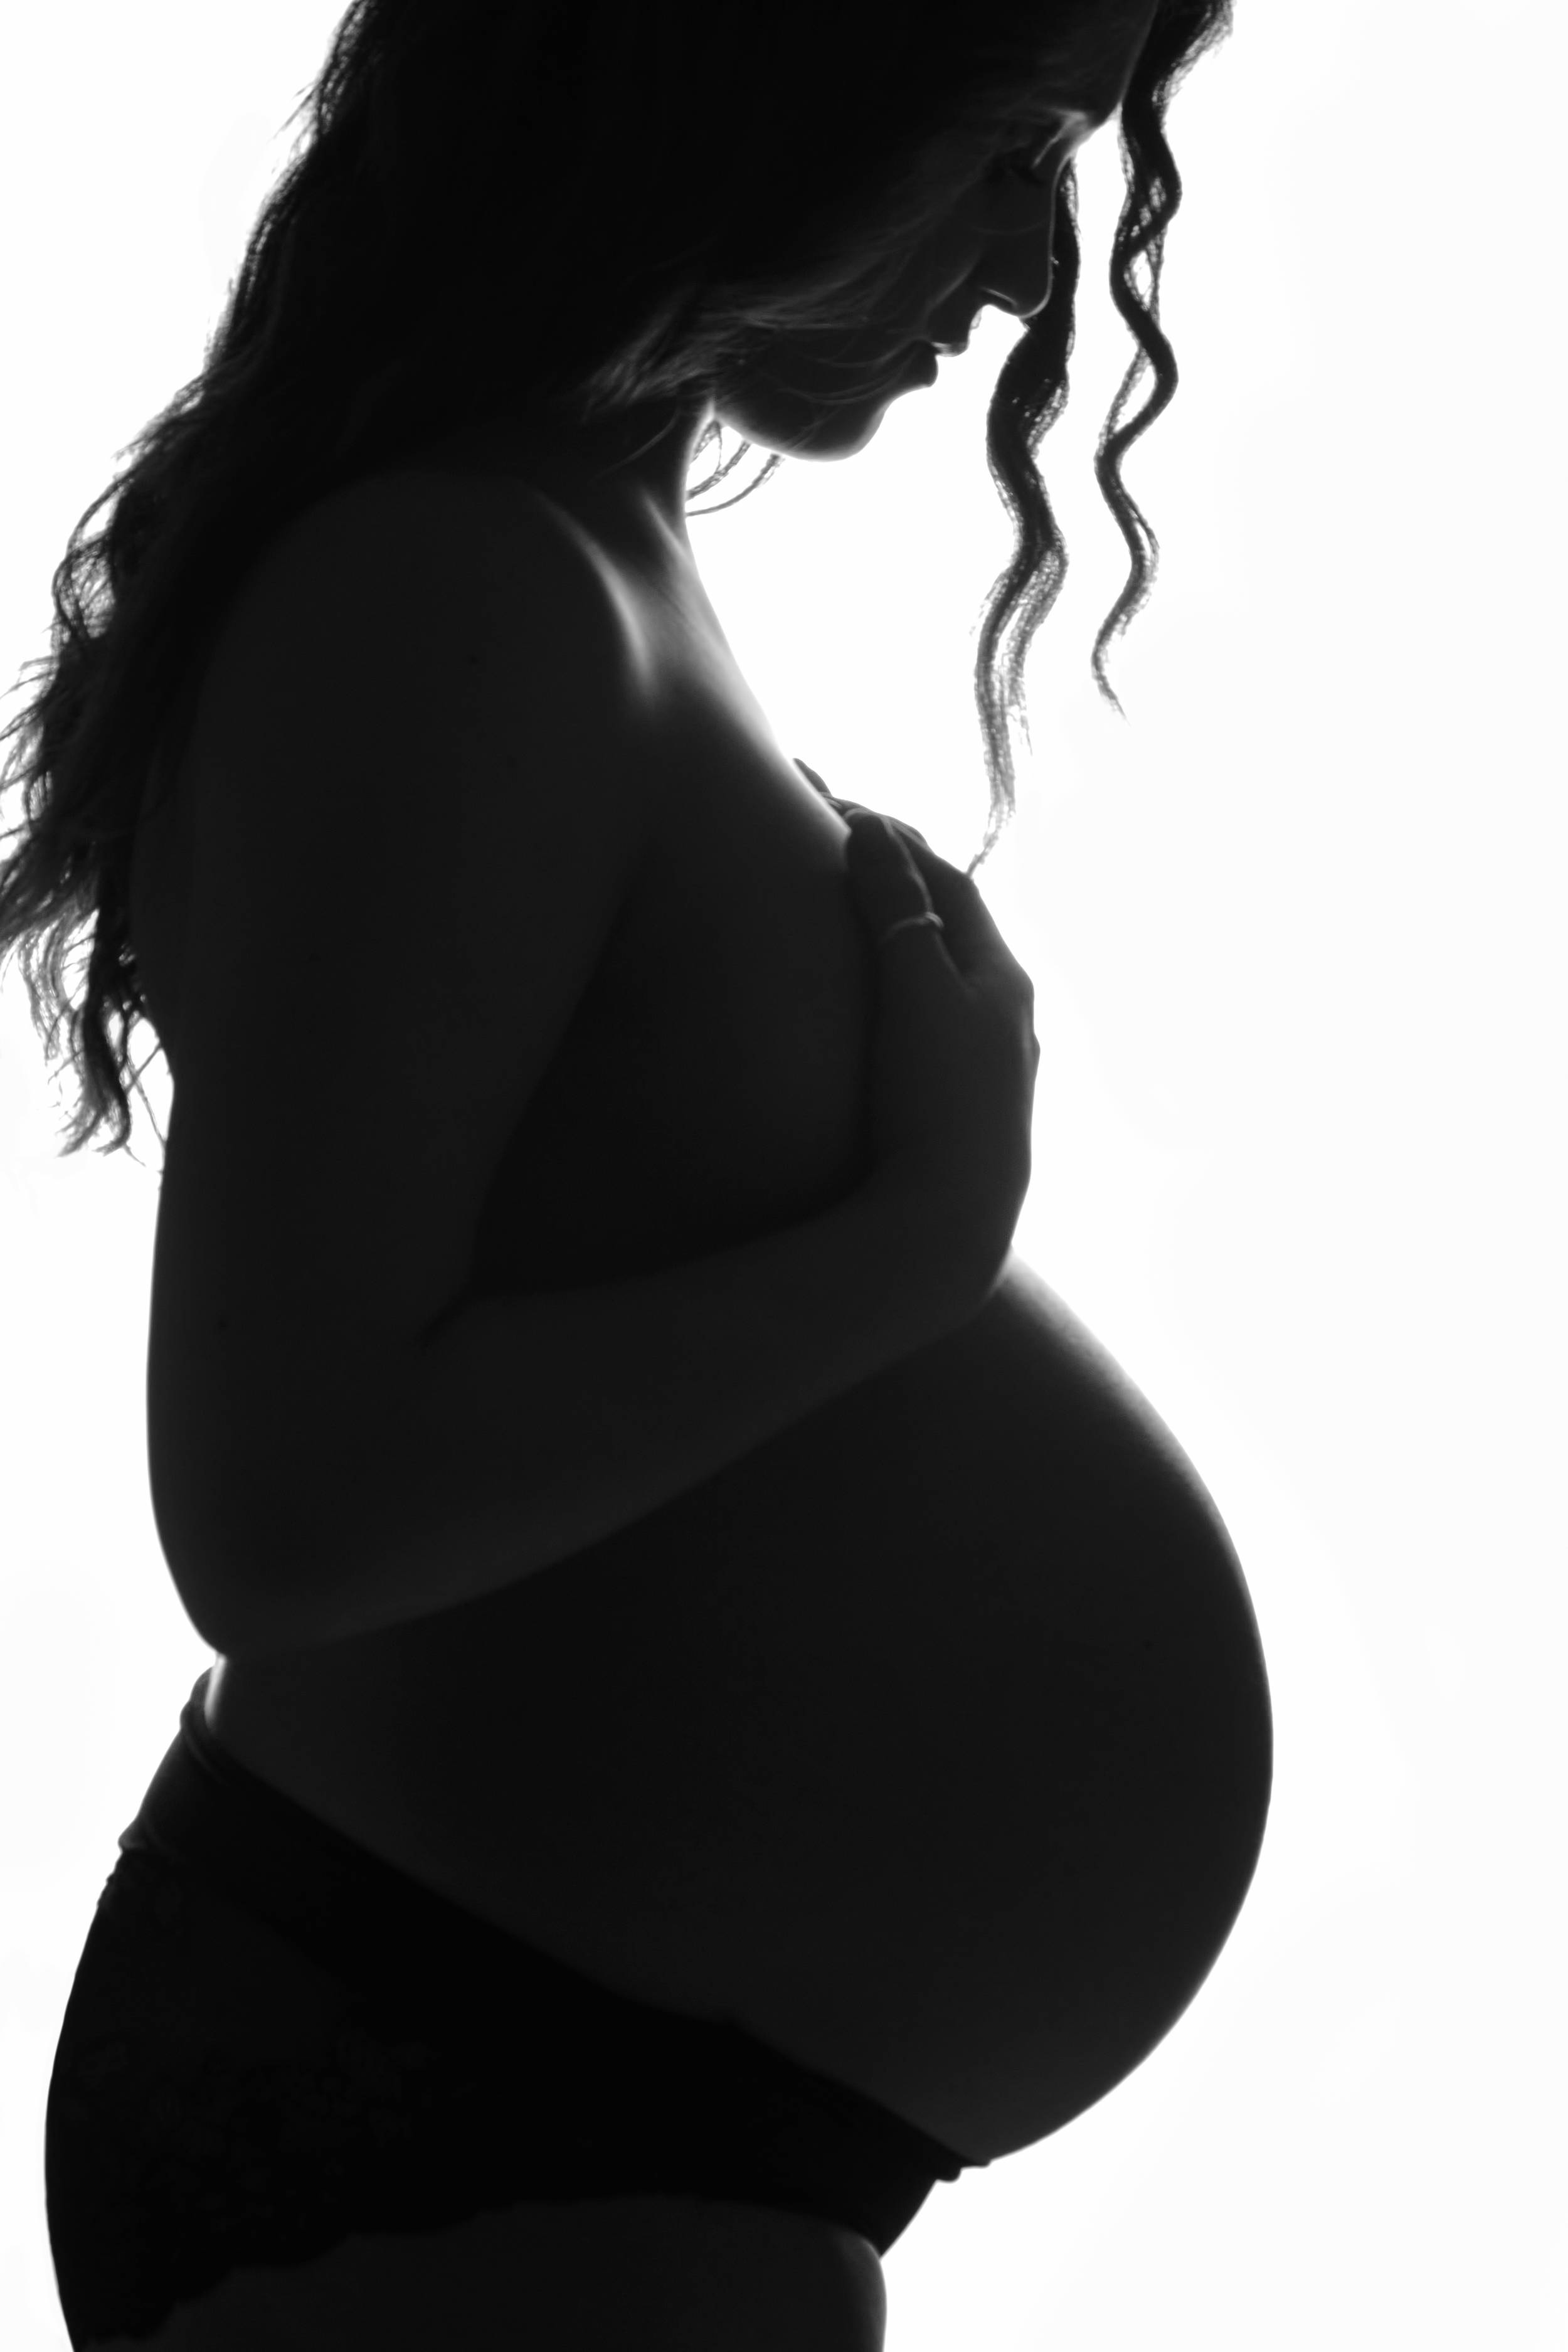 pregnancy-of-young-woman-profile-in-backlight-2022-10-31-10-10-17-utc_bOgXZ_Q2L.jpg